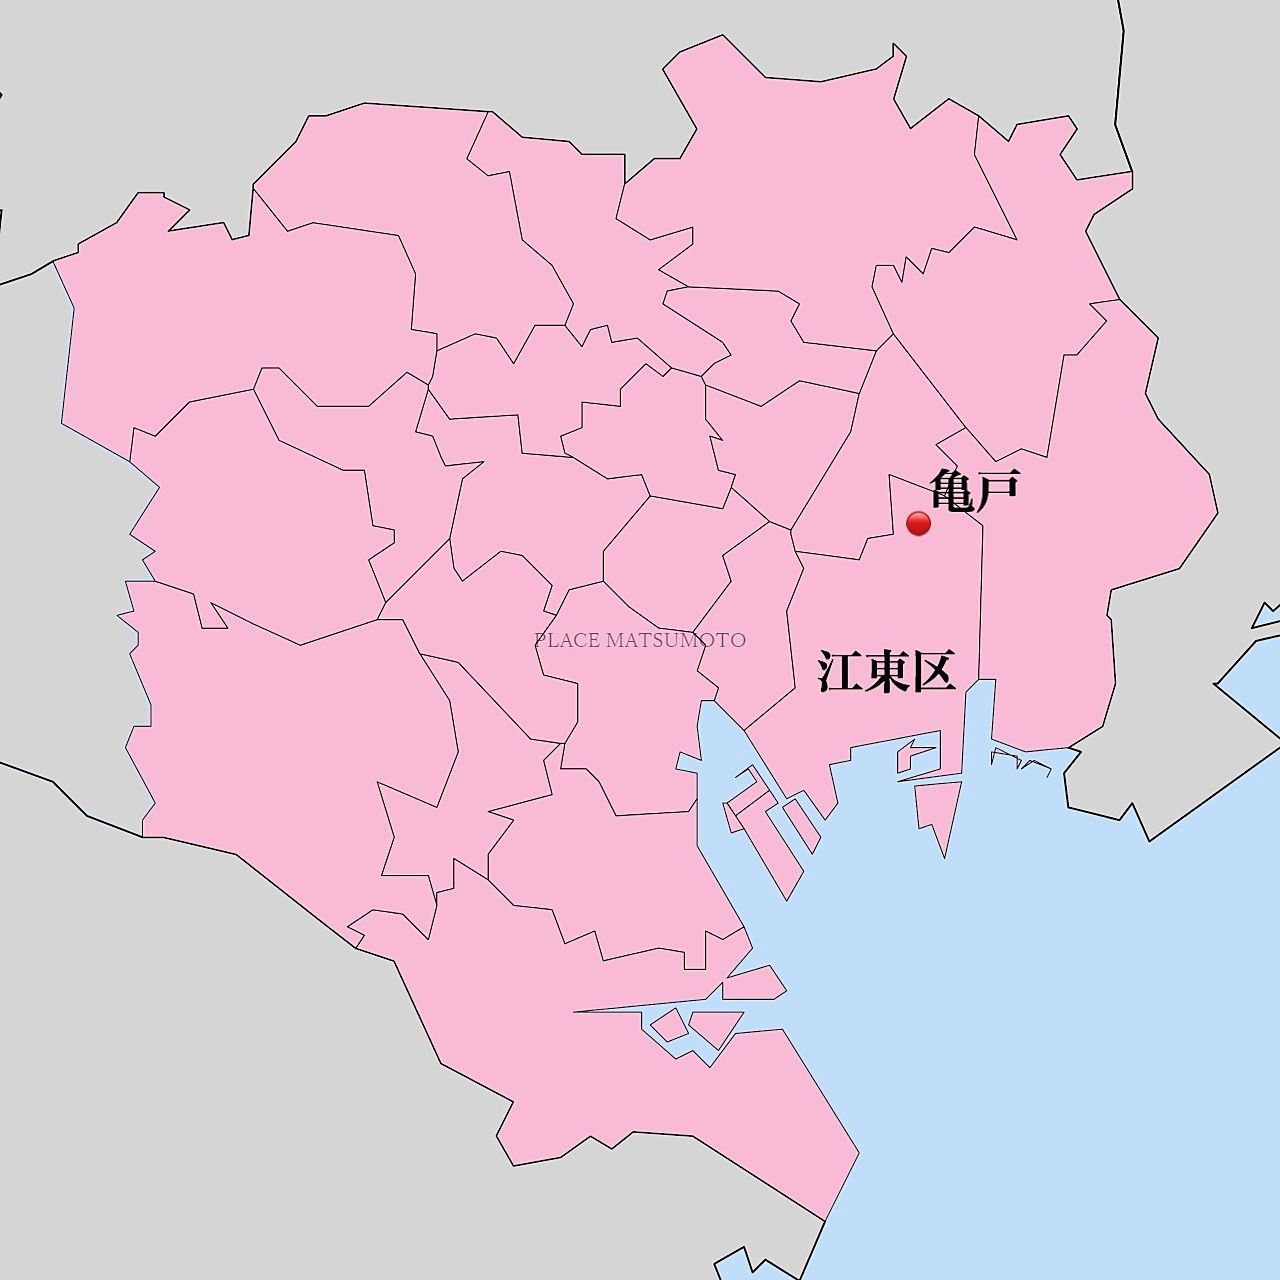 (Wikipedia「亀戸駅」の項目より転載・引用・一部変更加筆)亀戸(かめいど)は、東京23区内、江東区の地名で城東地域内にあります。現行では、亀戸一丁目から亀戸九丁目の行政地名で成り立っています。